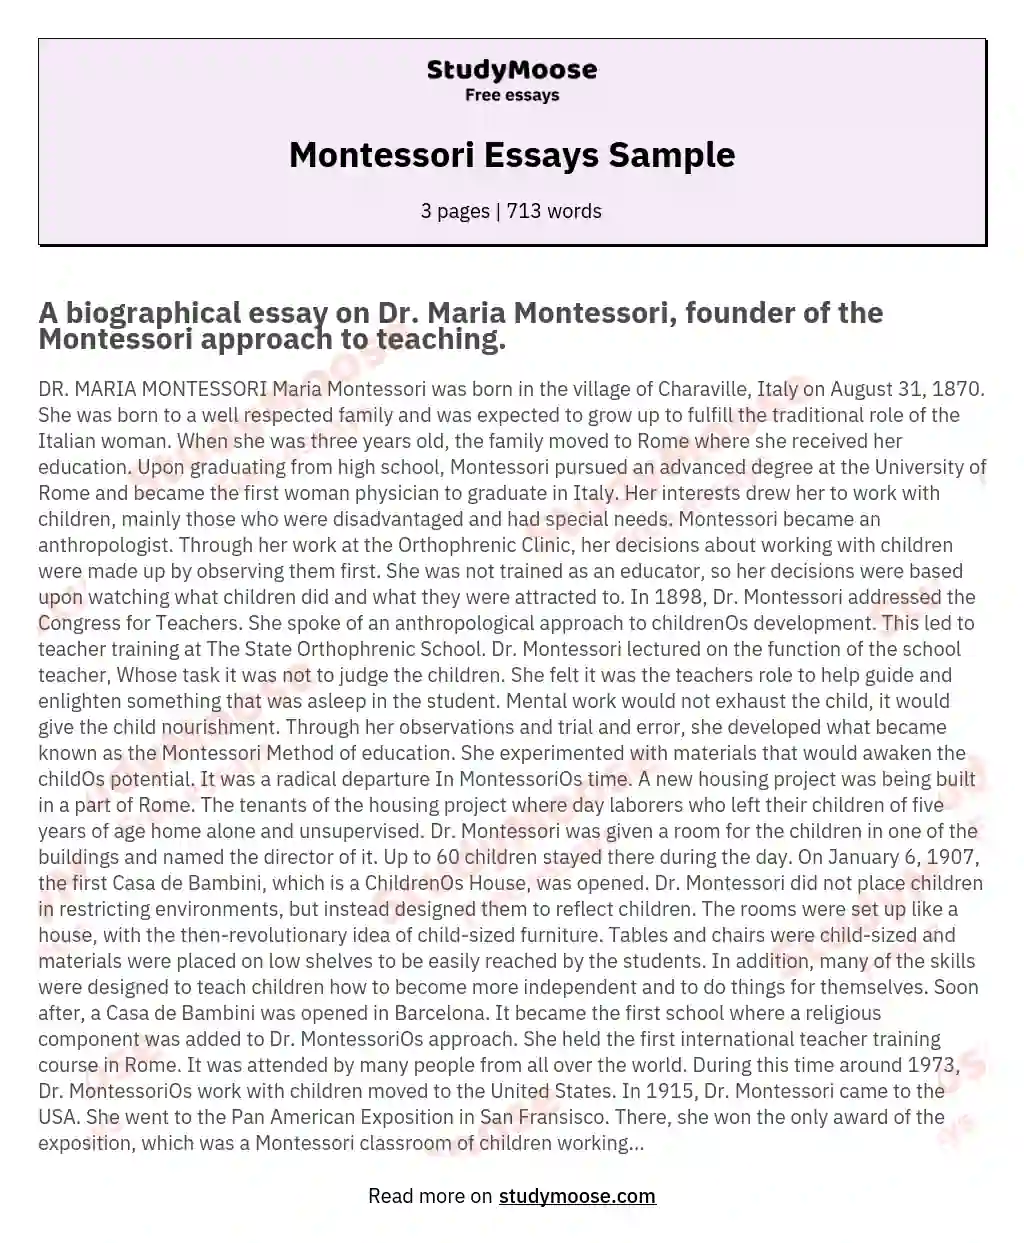 Montessori Essays Sample essay